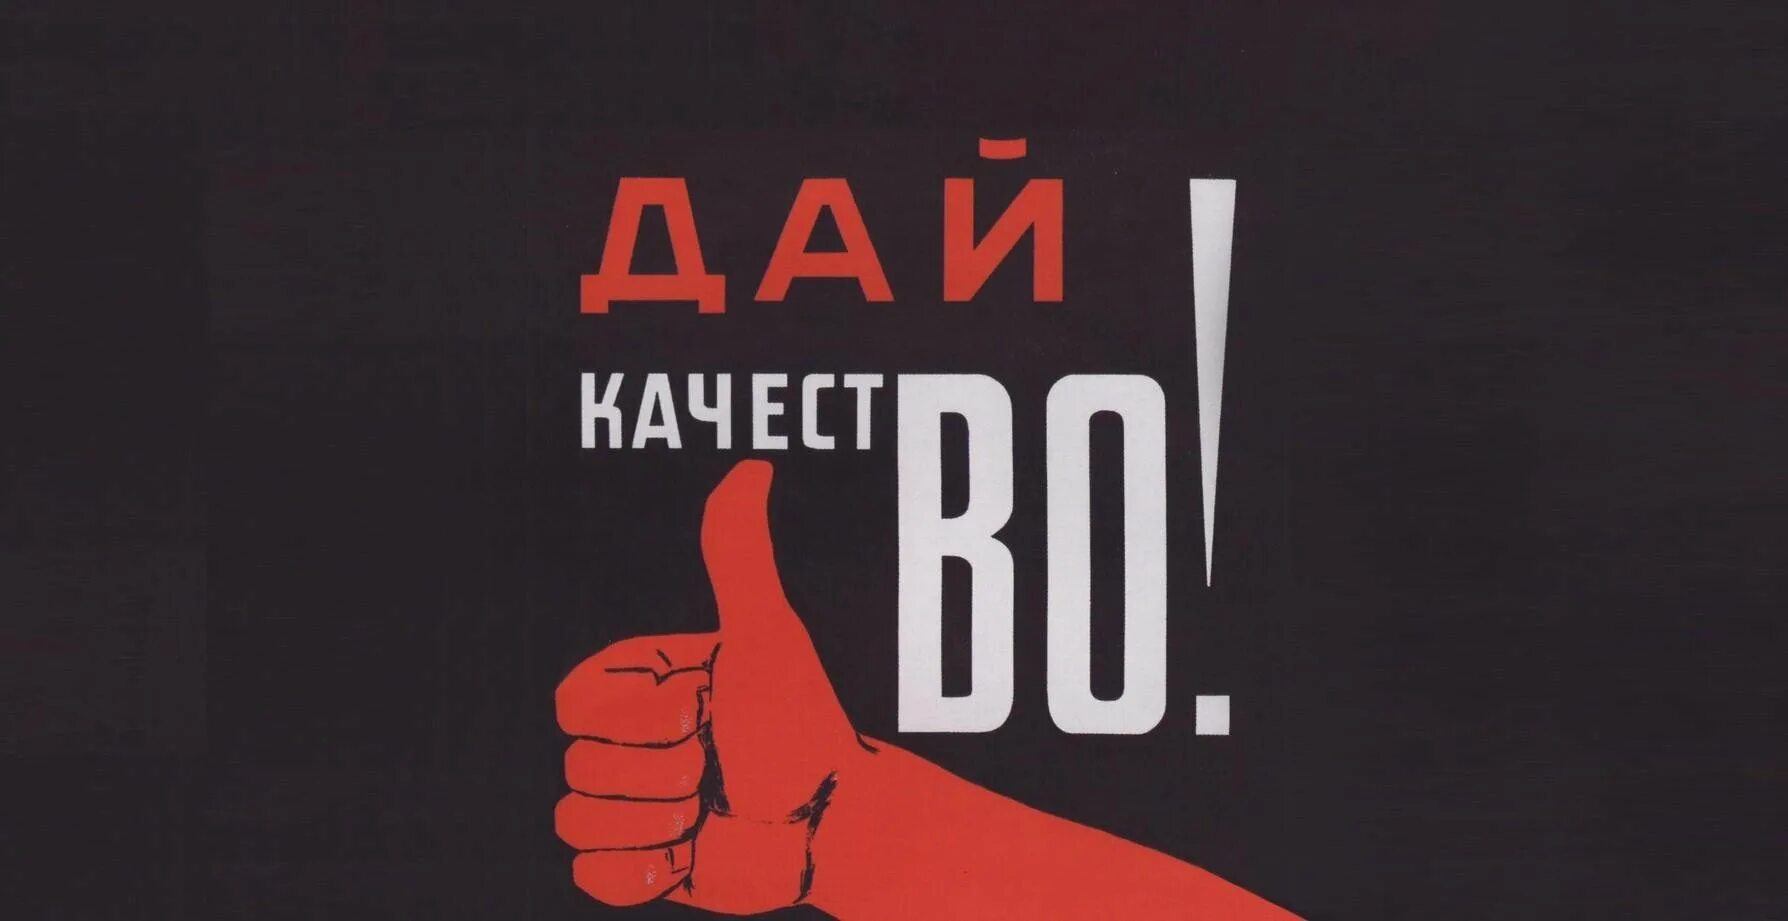 Слоган даешь. Советские плакаты. Дай качество плакат. Советские плакаты качество. Советские плакаты про качество продукции.